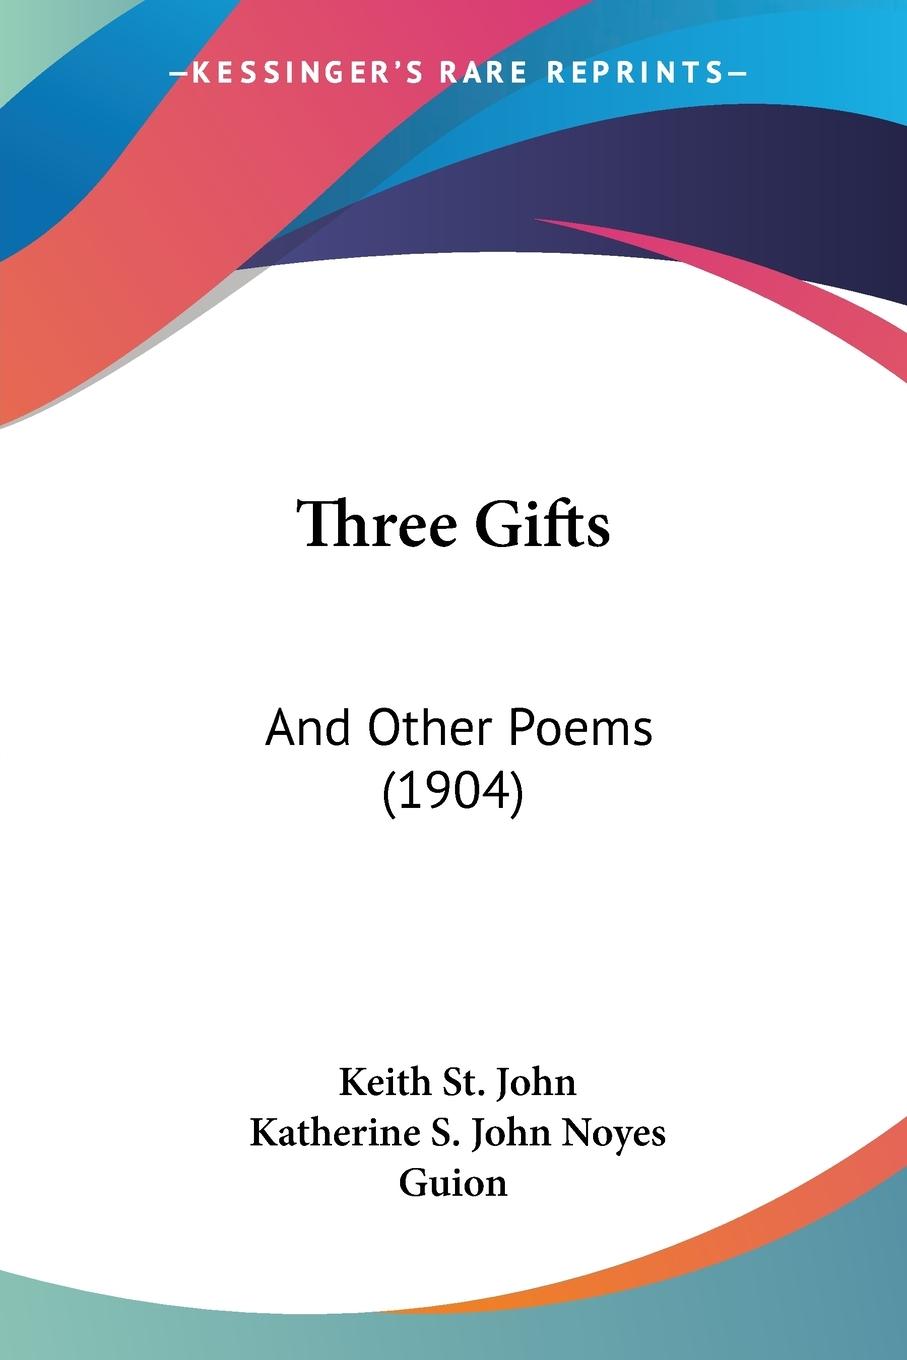 Three Gifts - St. John, Keith Guion, Katherine S. John Noyes